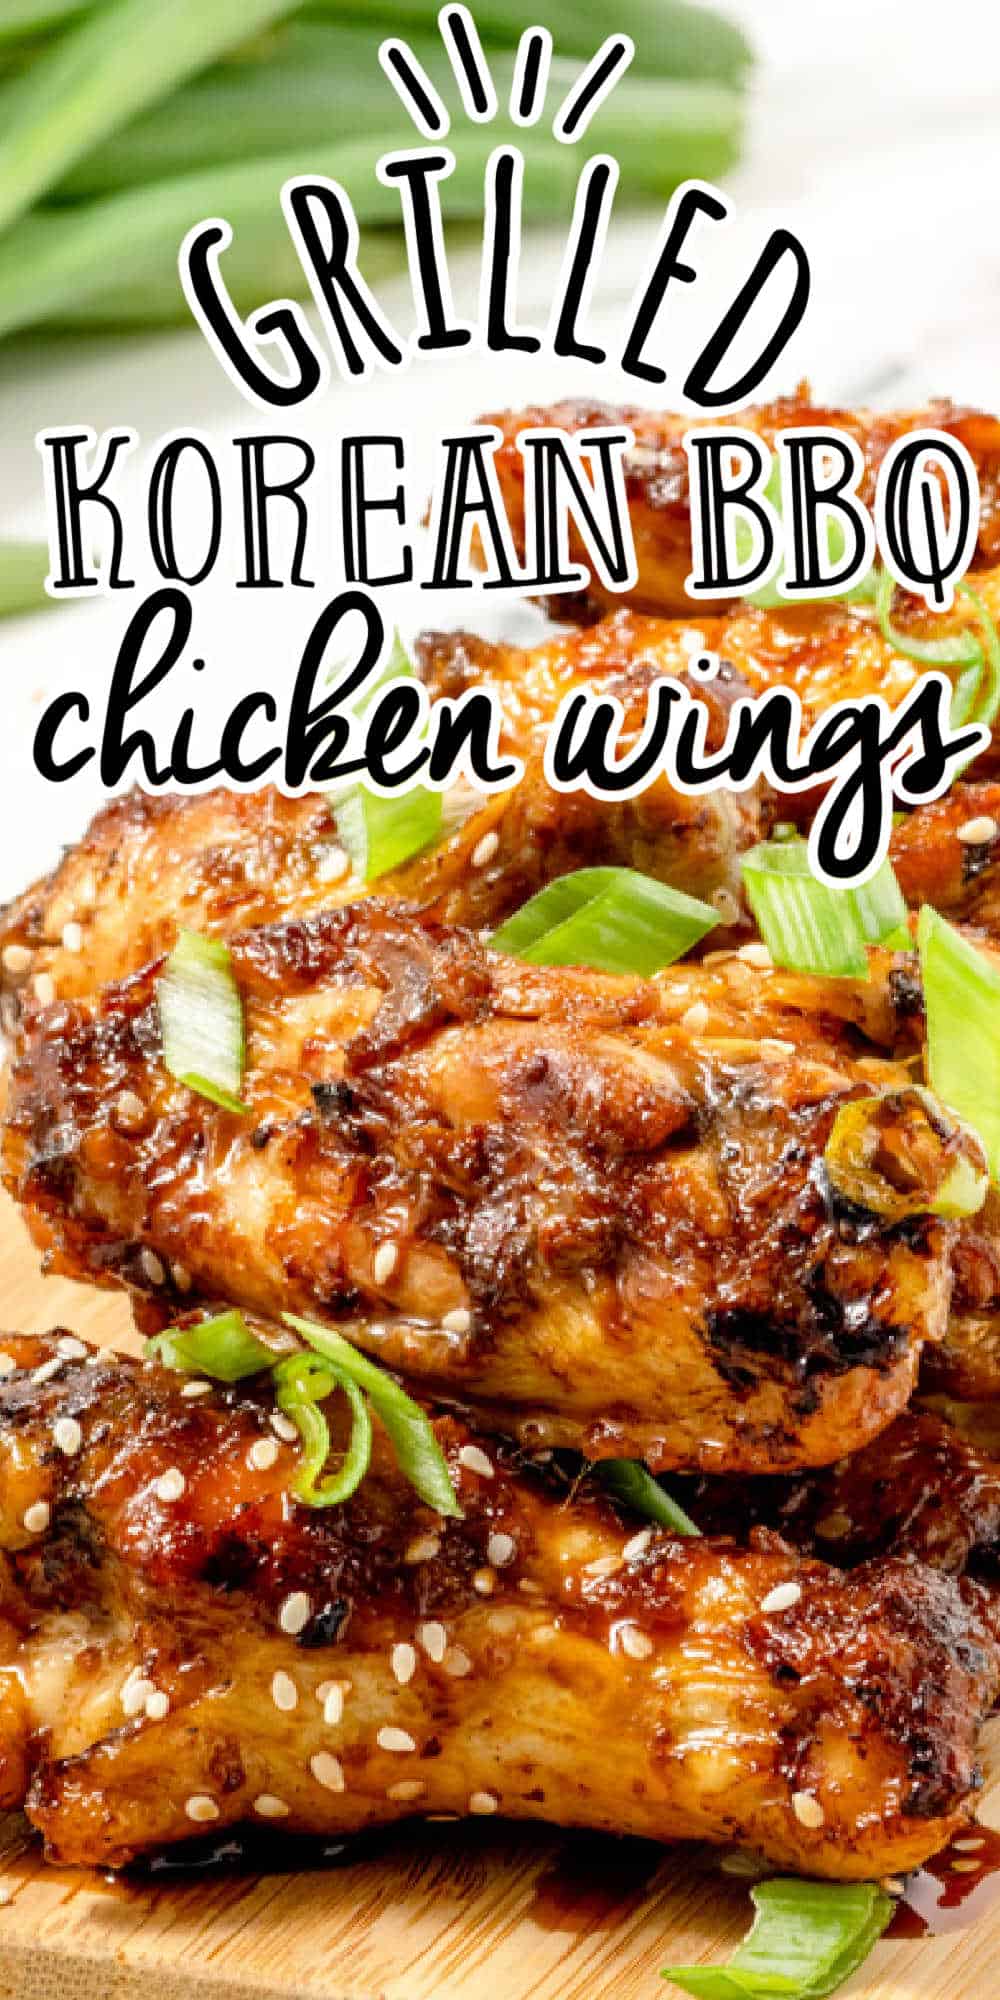 Korean BBQ Grilled Wings Recipe (Easy Grilled wings)